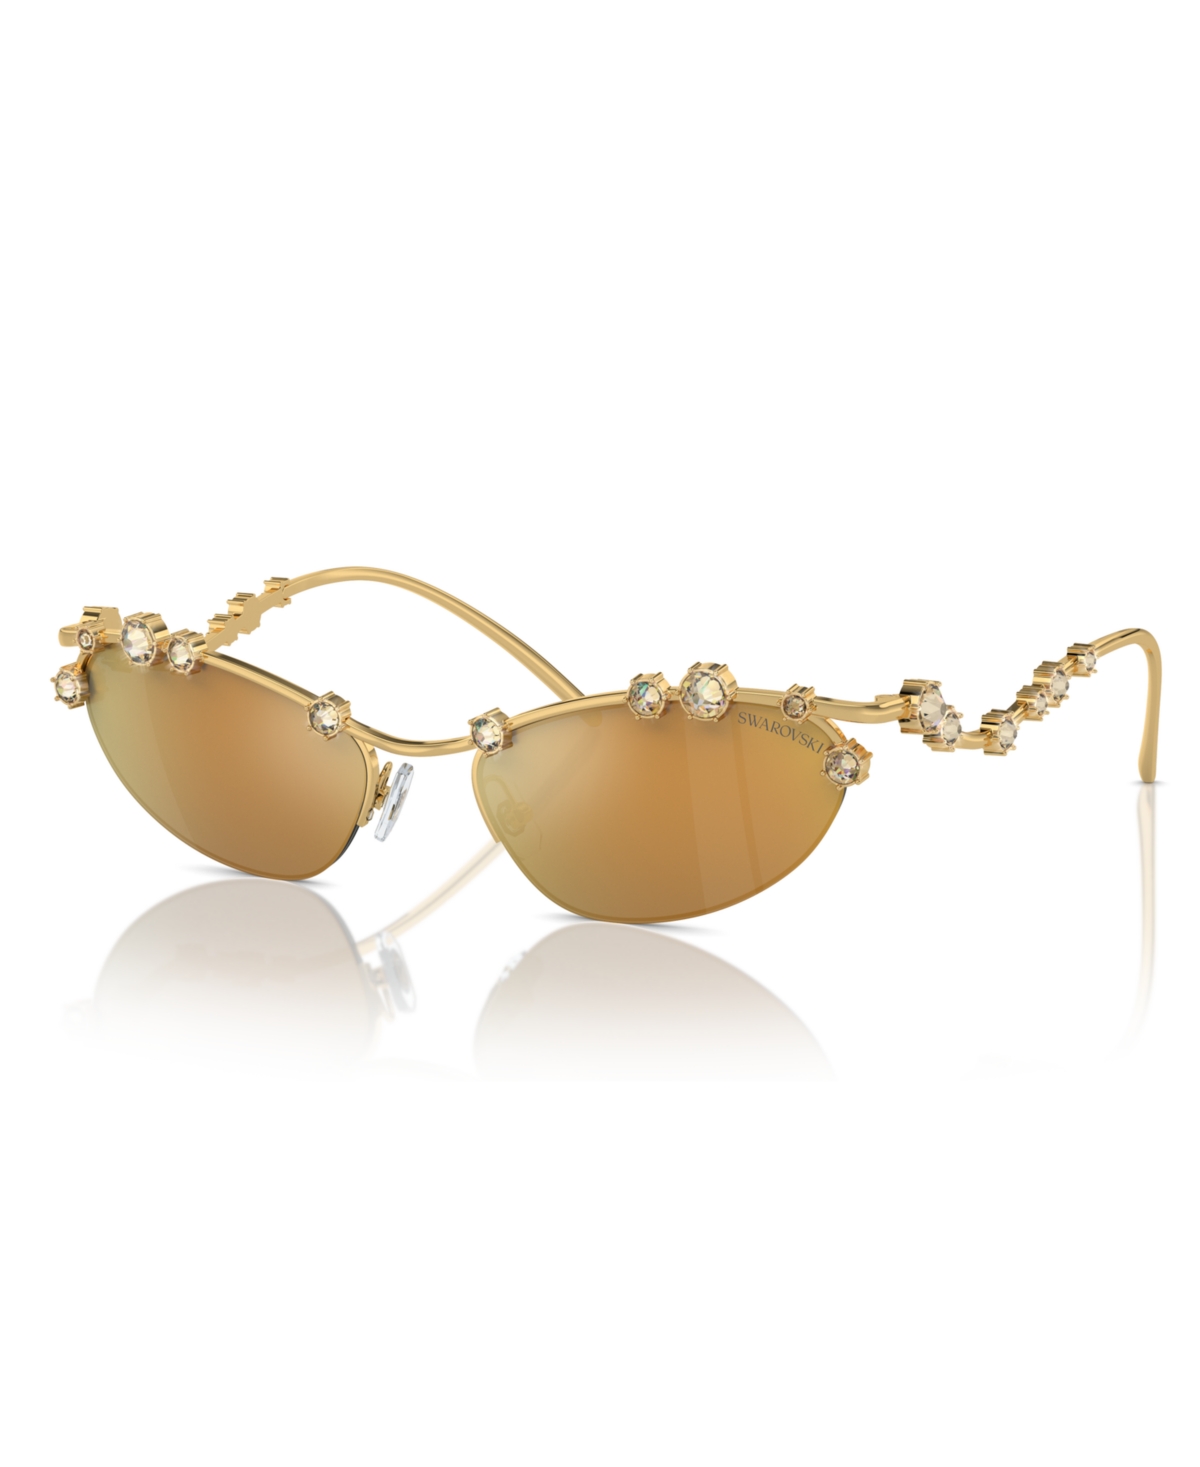 Women's Sunglasses, Sk7016 - Gold